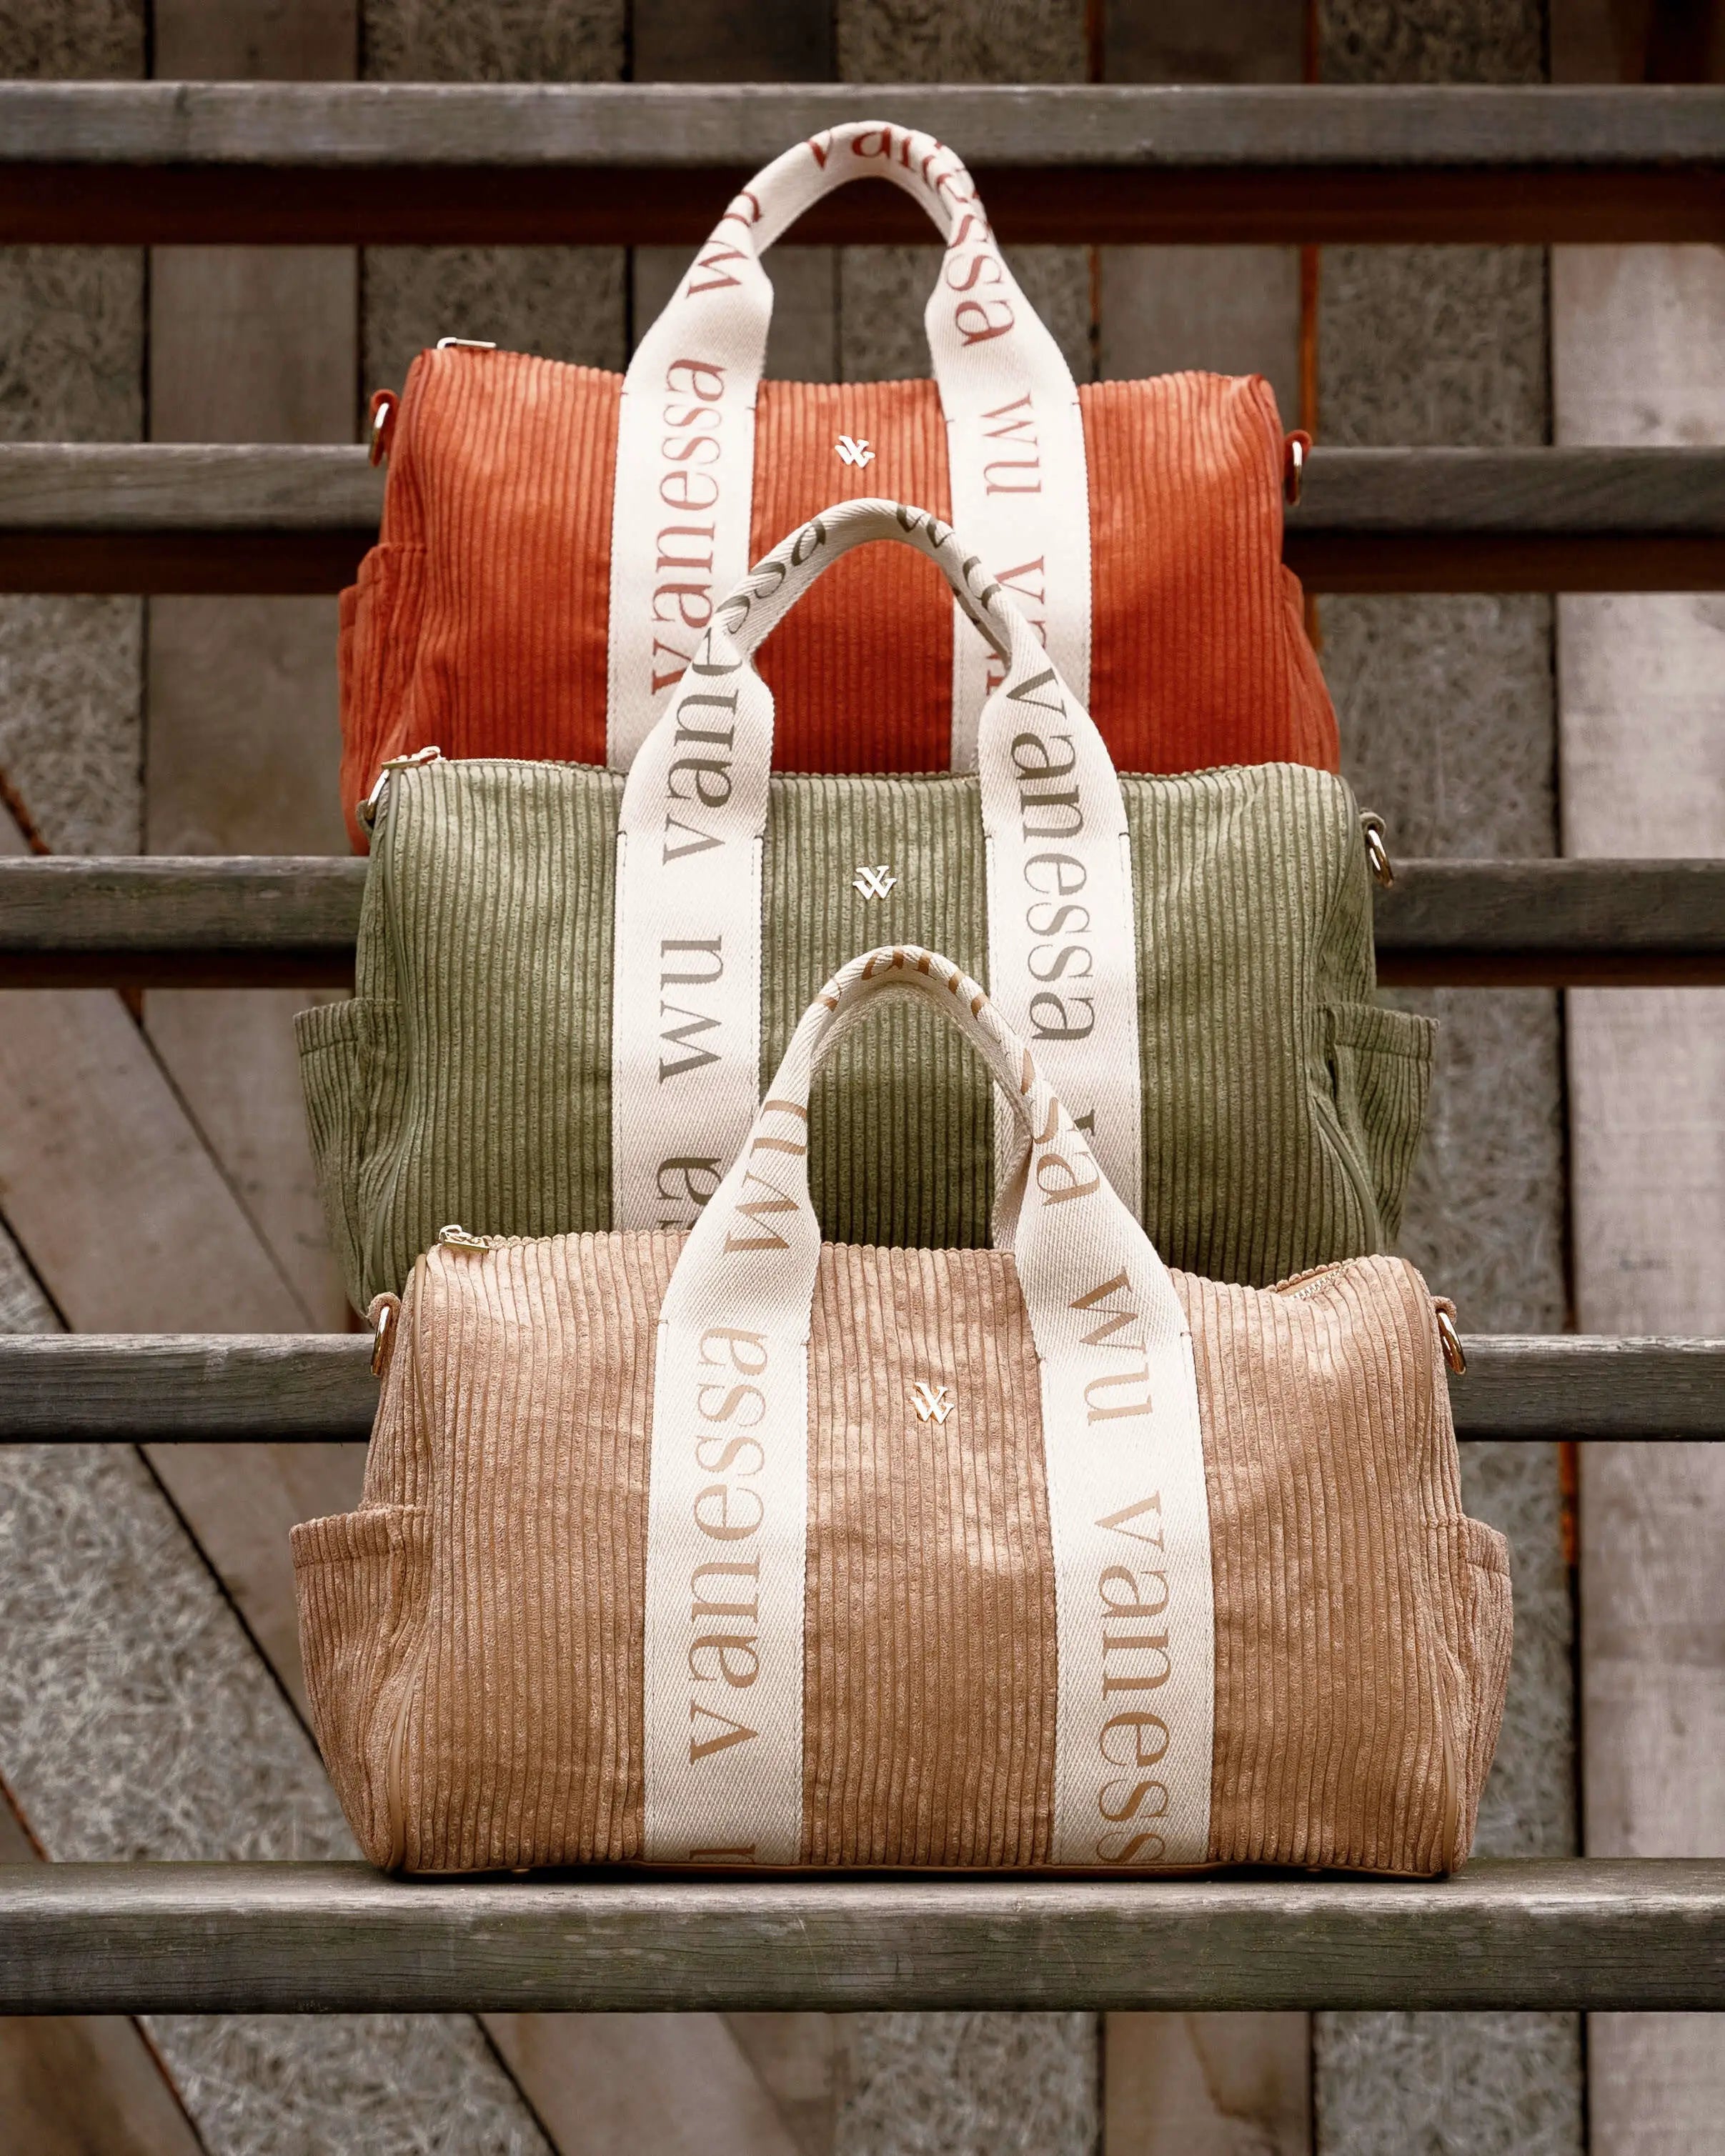 Three Adrienne corduroy weekend bags from Vanessa Wu, in beige, brick and khaki